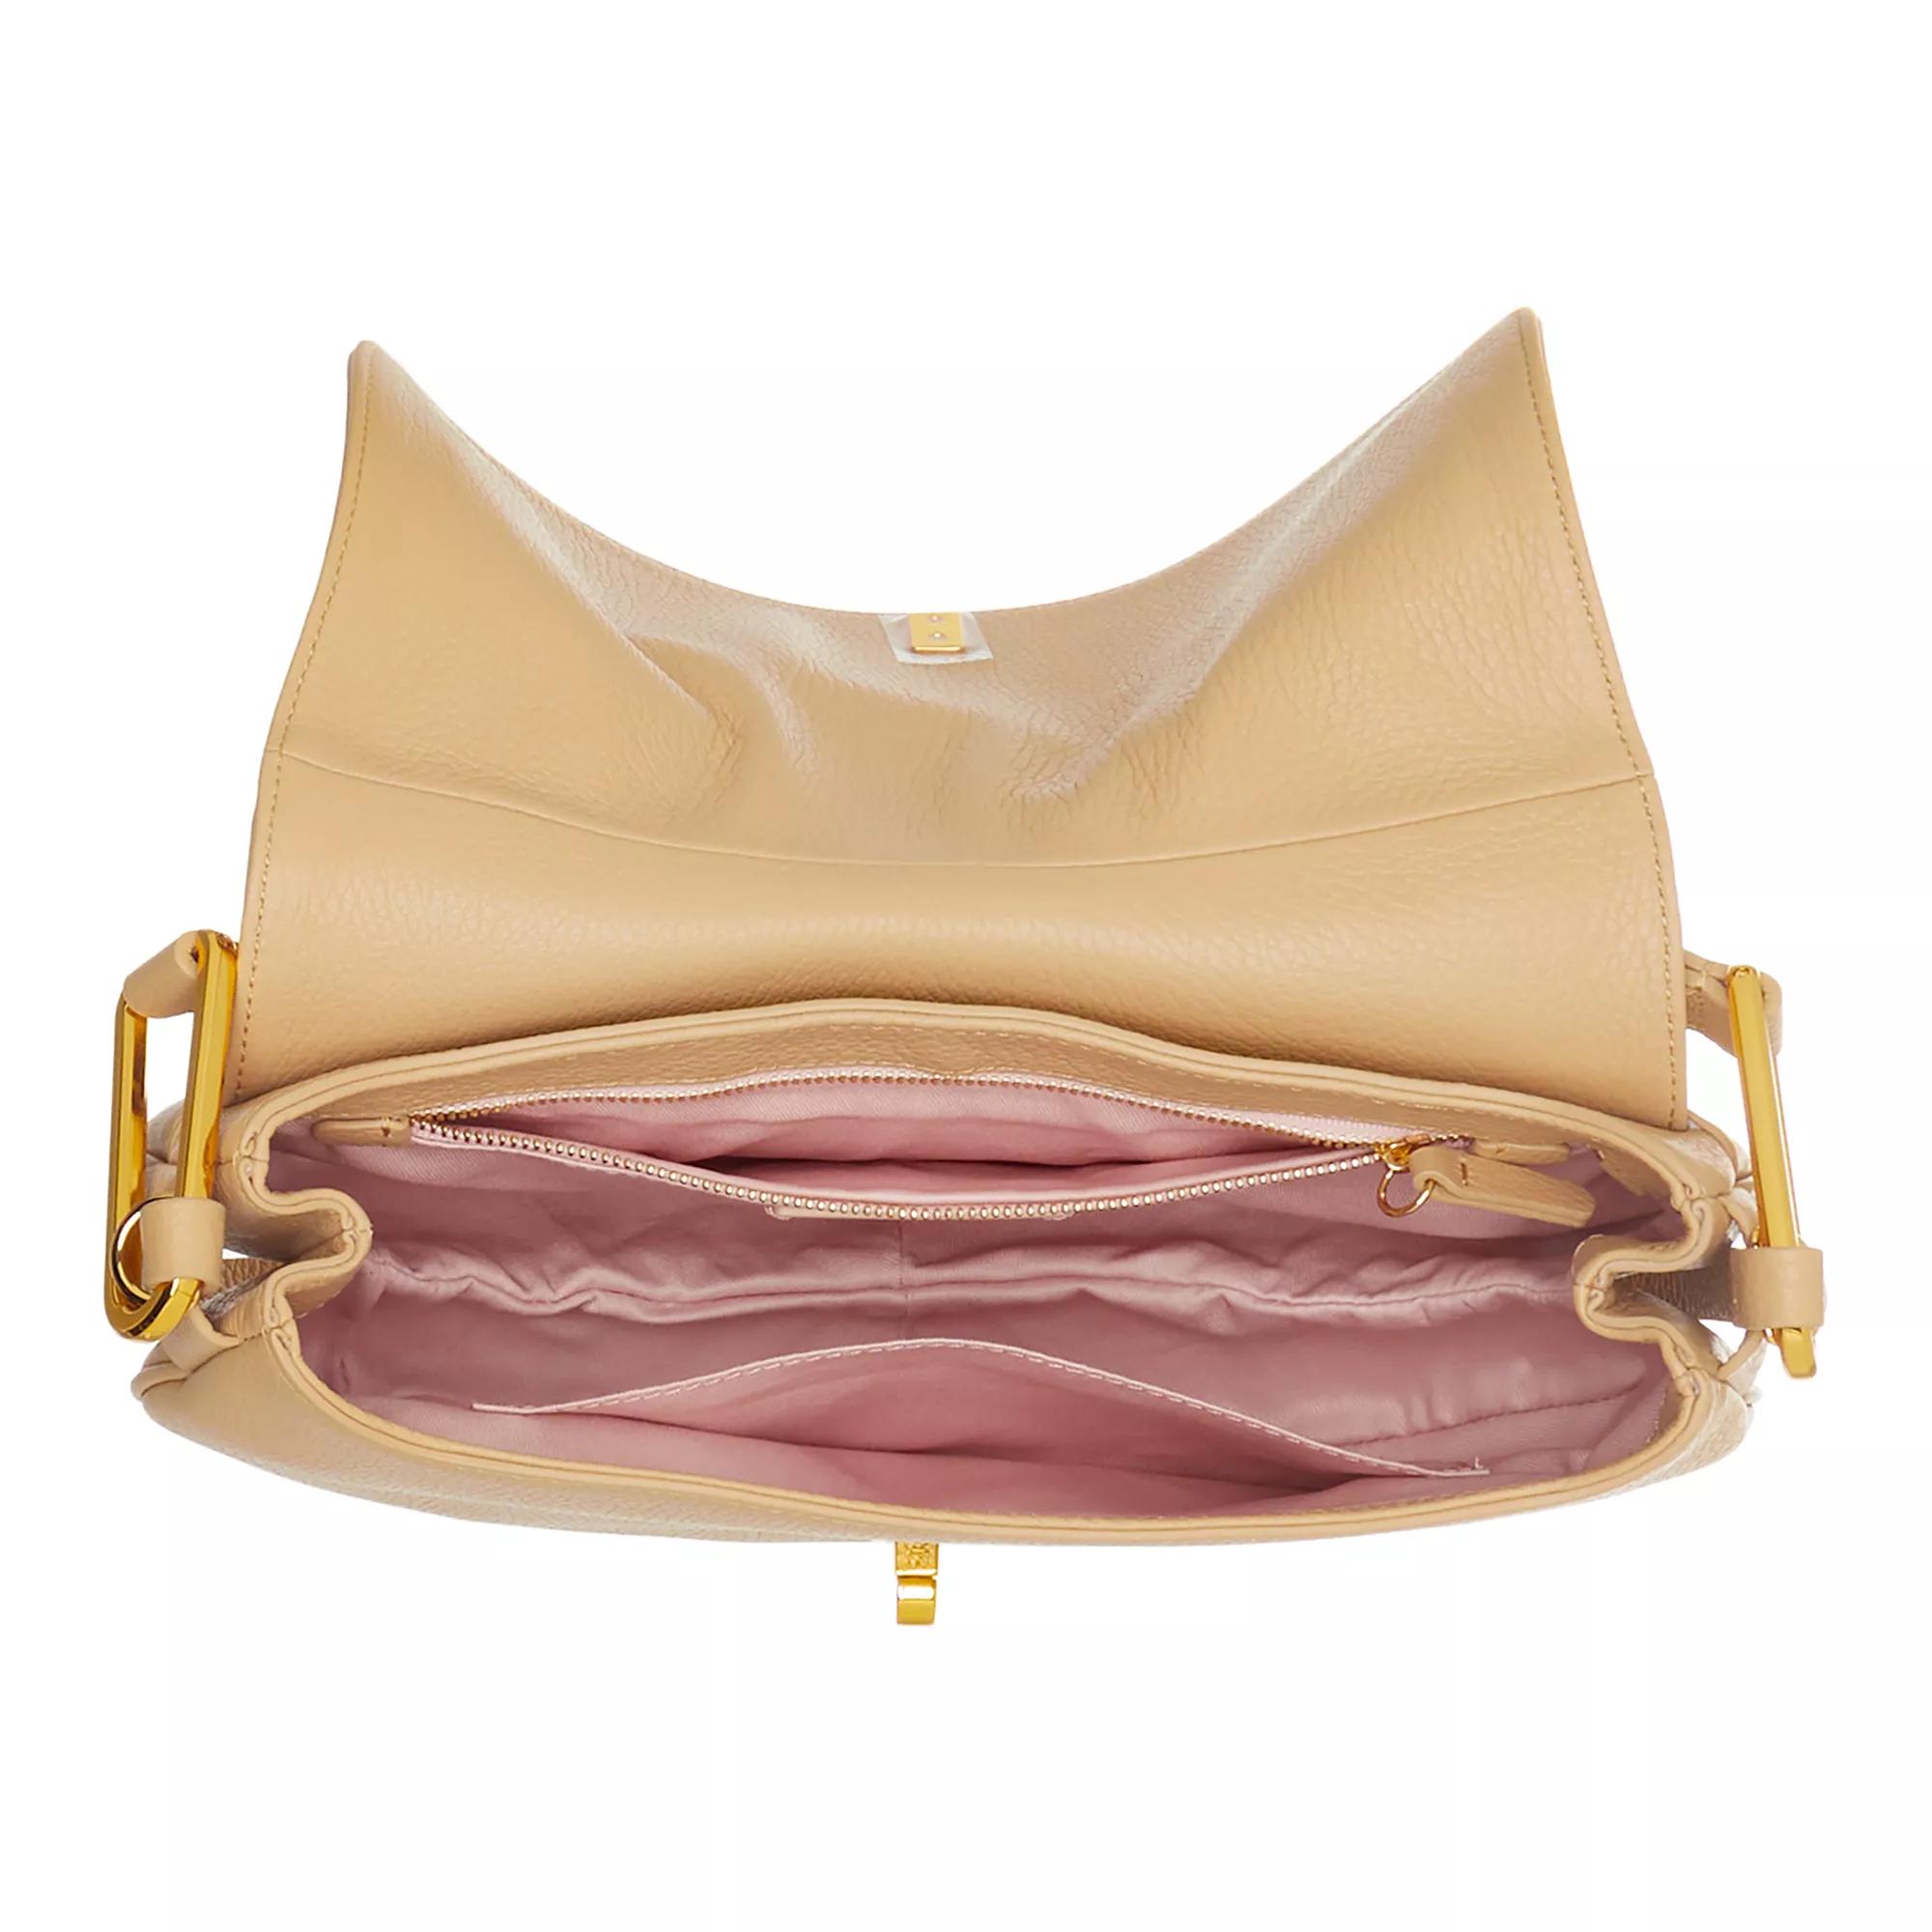 Coccinelle Satchels Magie Soft Handbag in beige